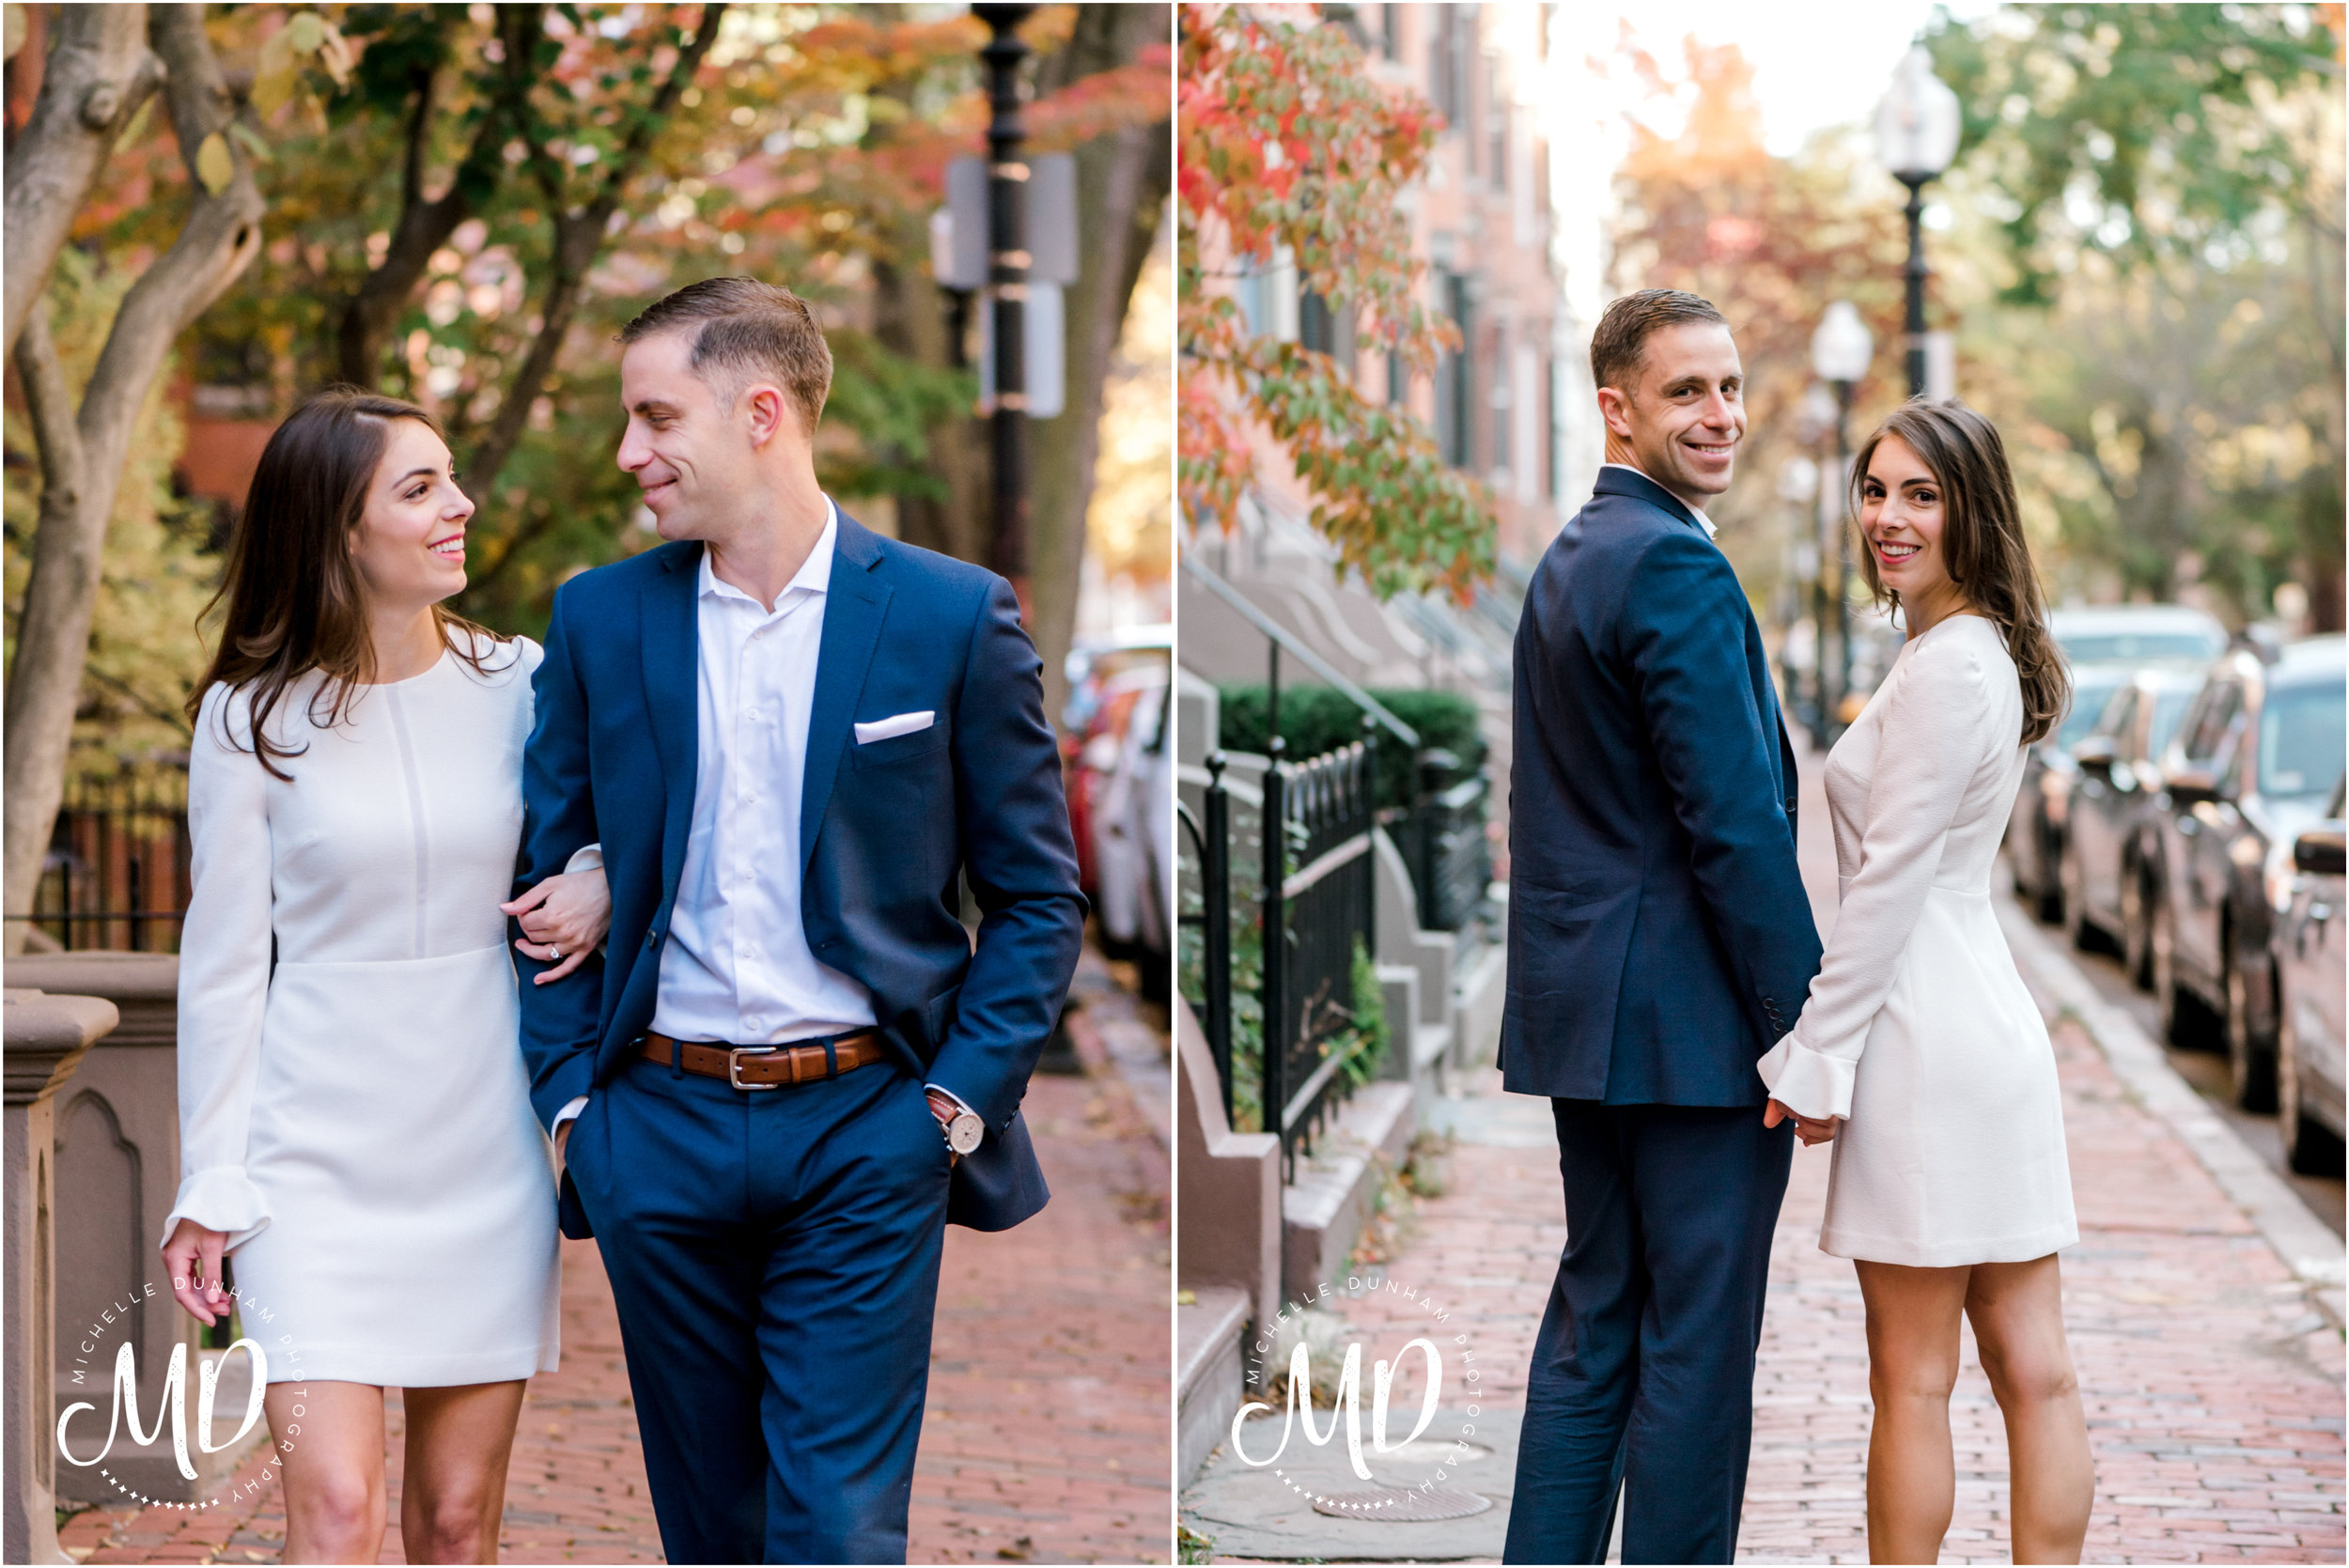 Michelle-Dunham-Photography-Engagement-South-End-Boston-8.jpg